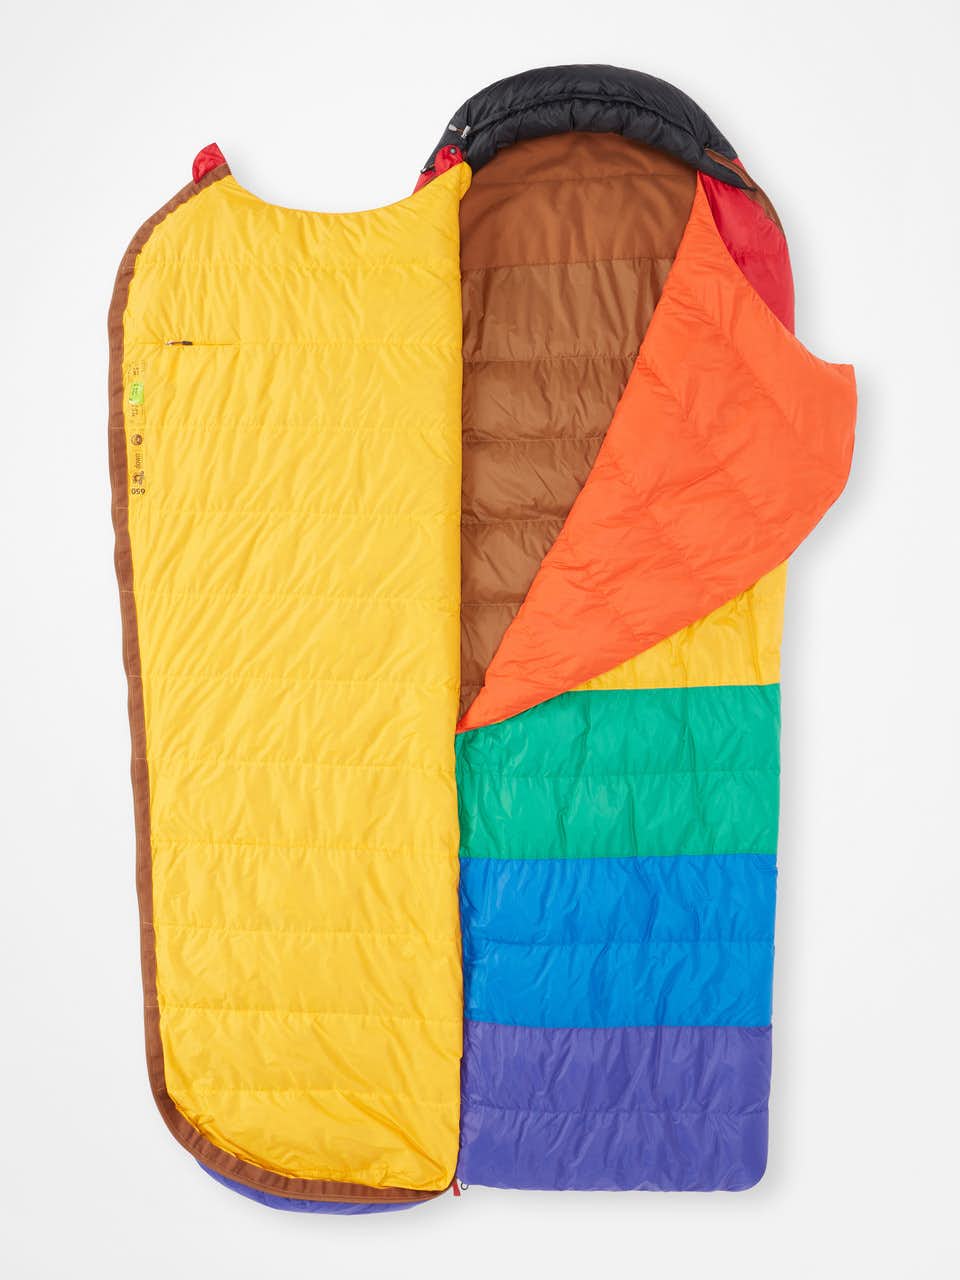 Rainbow Yolla Bolly -1C Down Sleeping Bag Rainbow